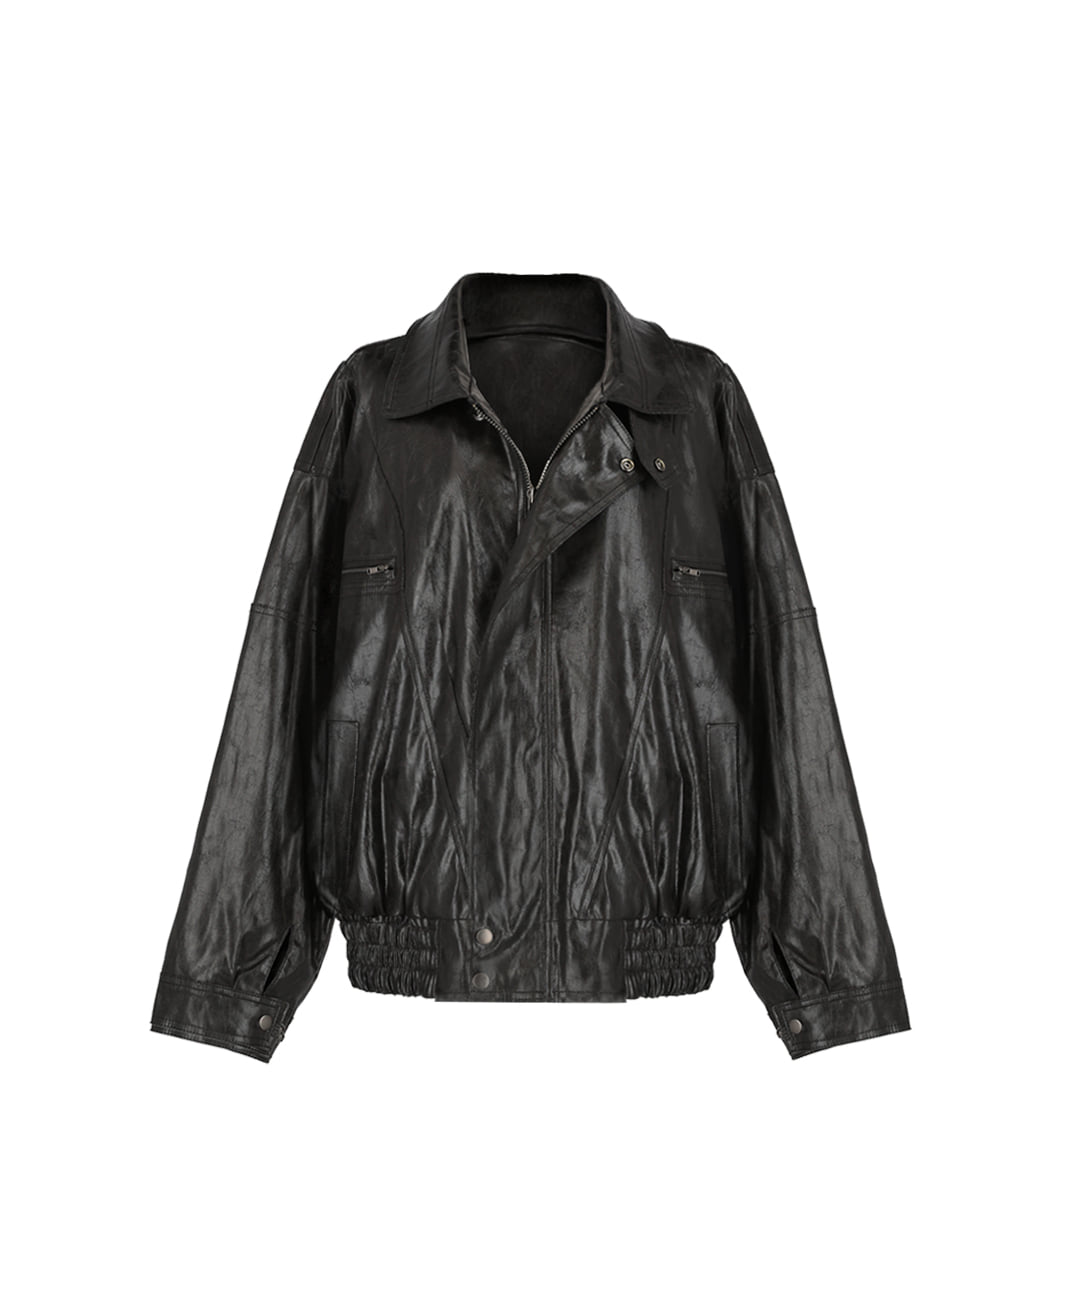 Brooklyn leather crack jacket